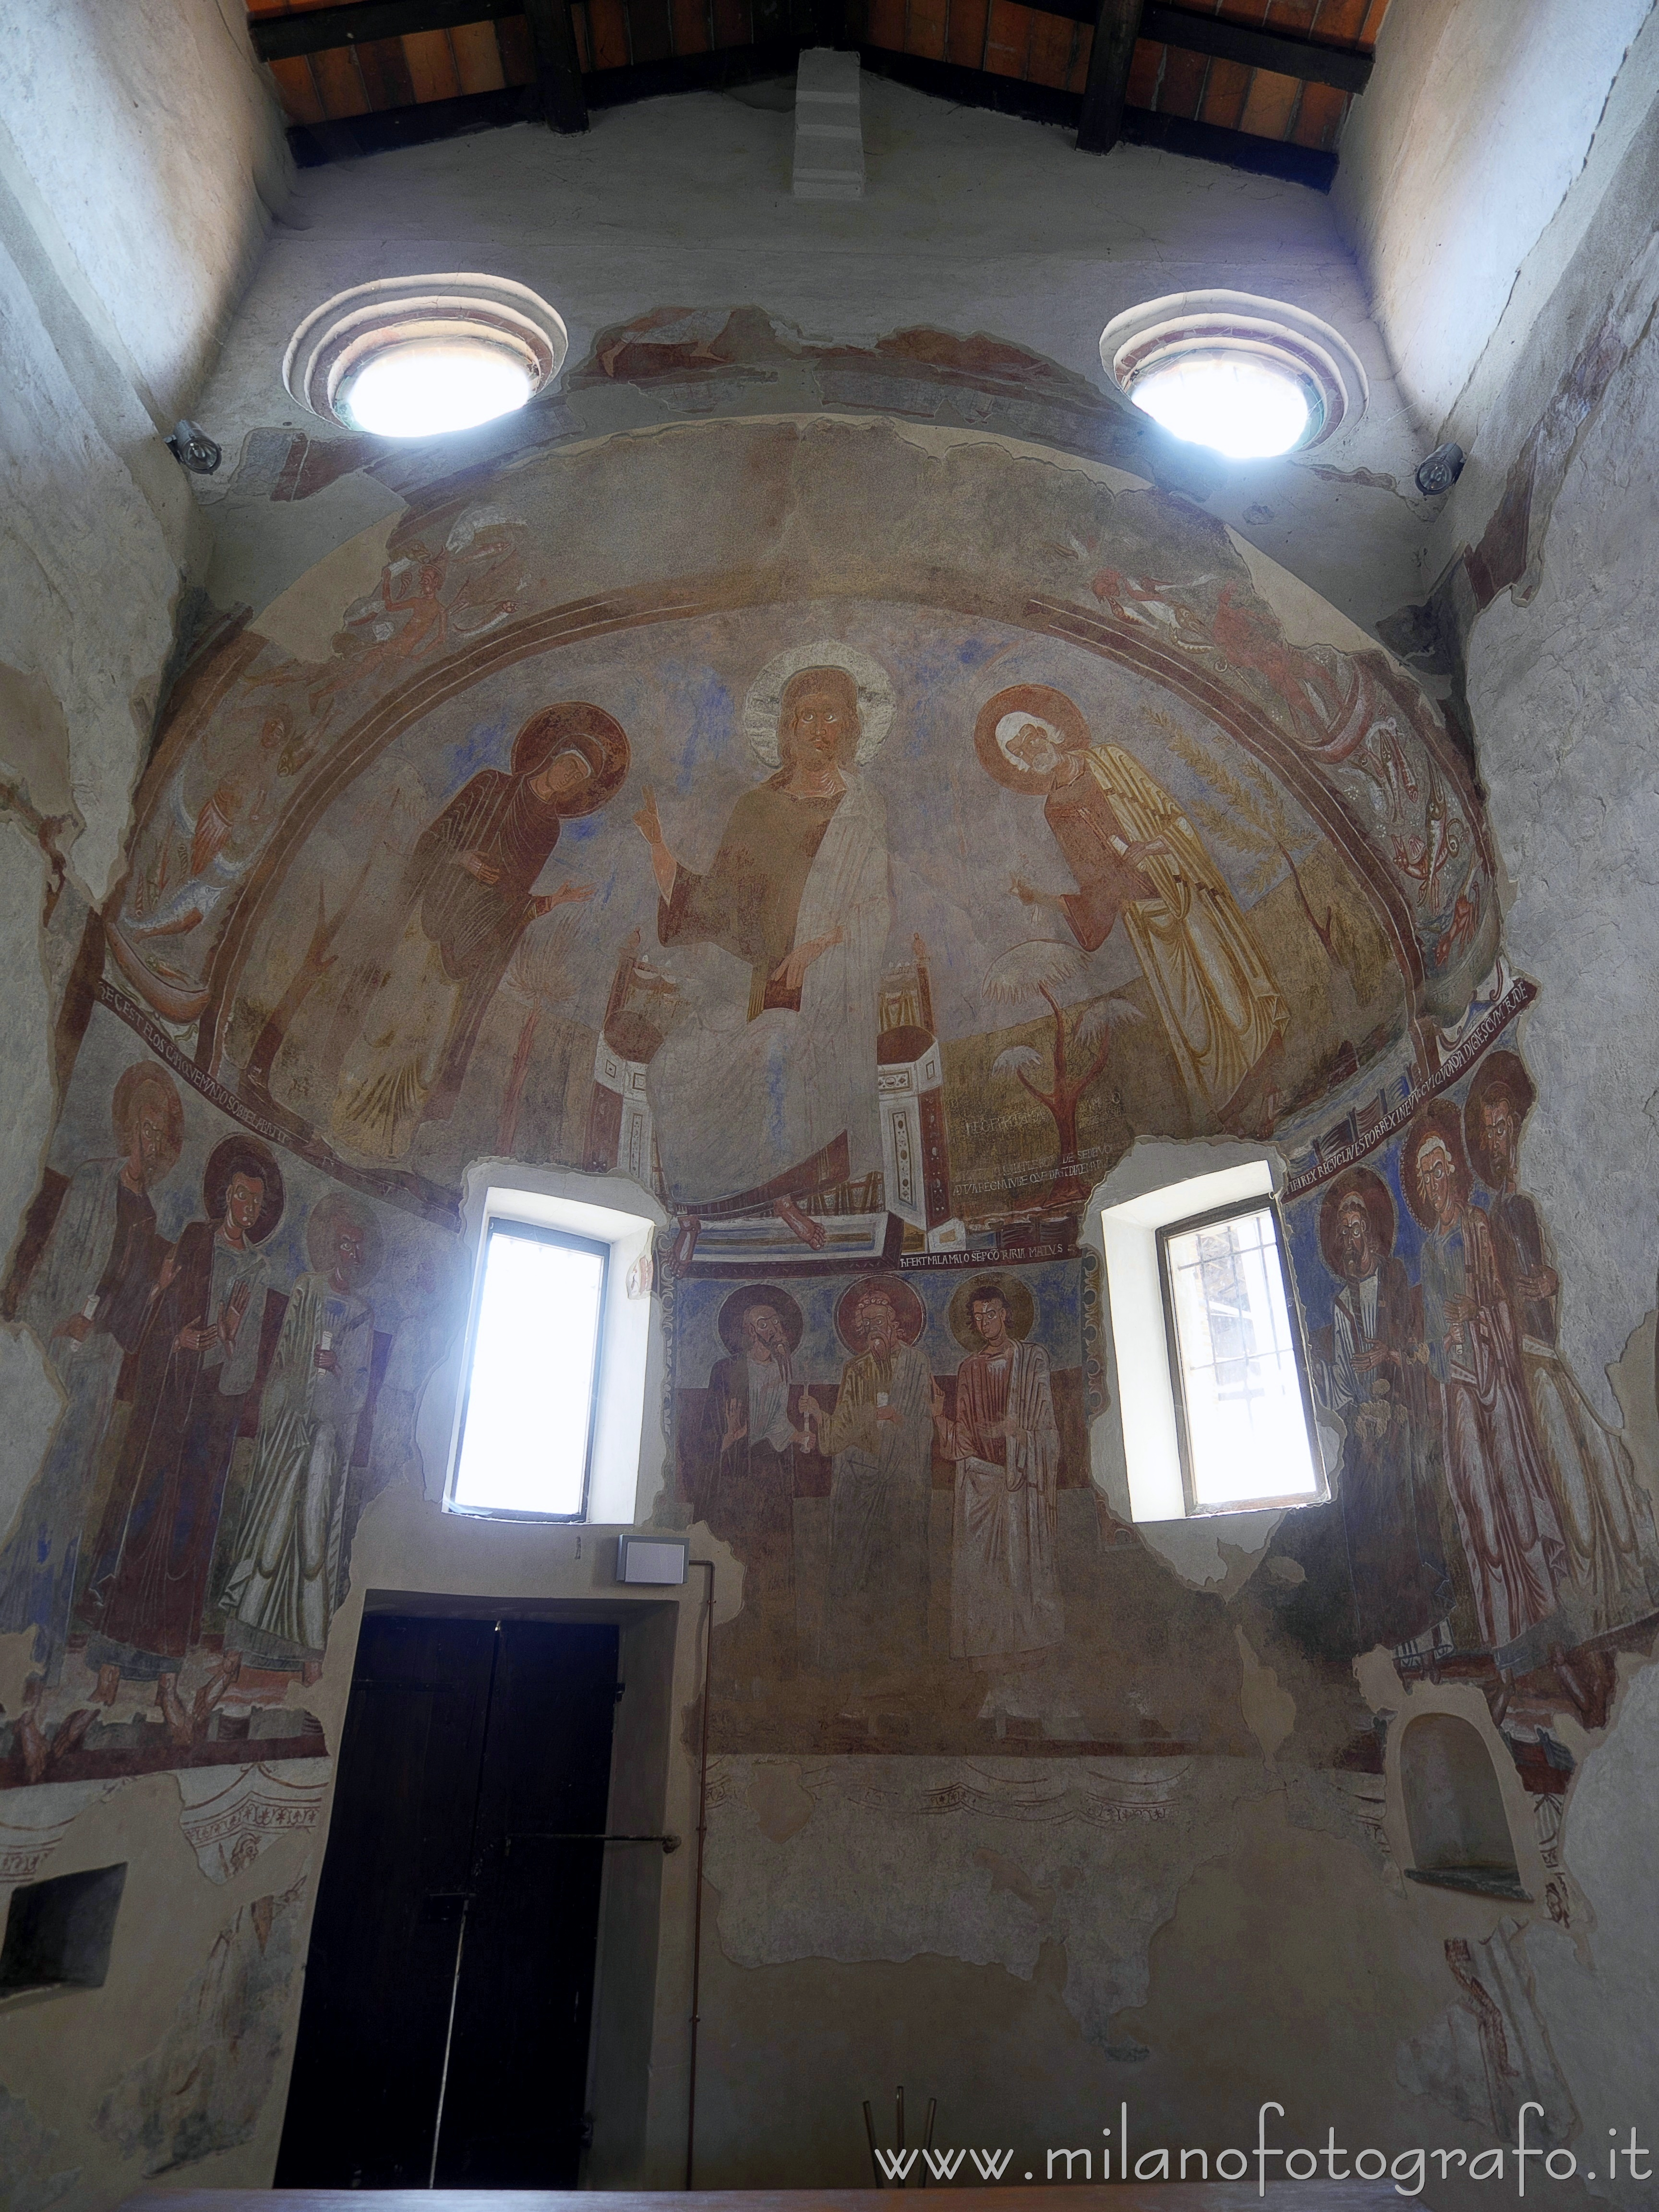 Carpignano Sesia (Novara, Italy): Central apse of St. Peter's Church - Carpignano Sesia (Novara, Italy)